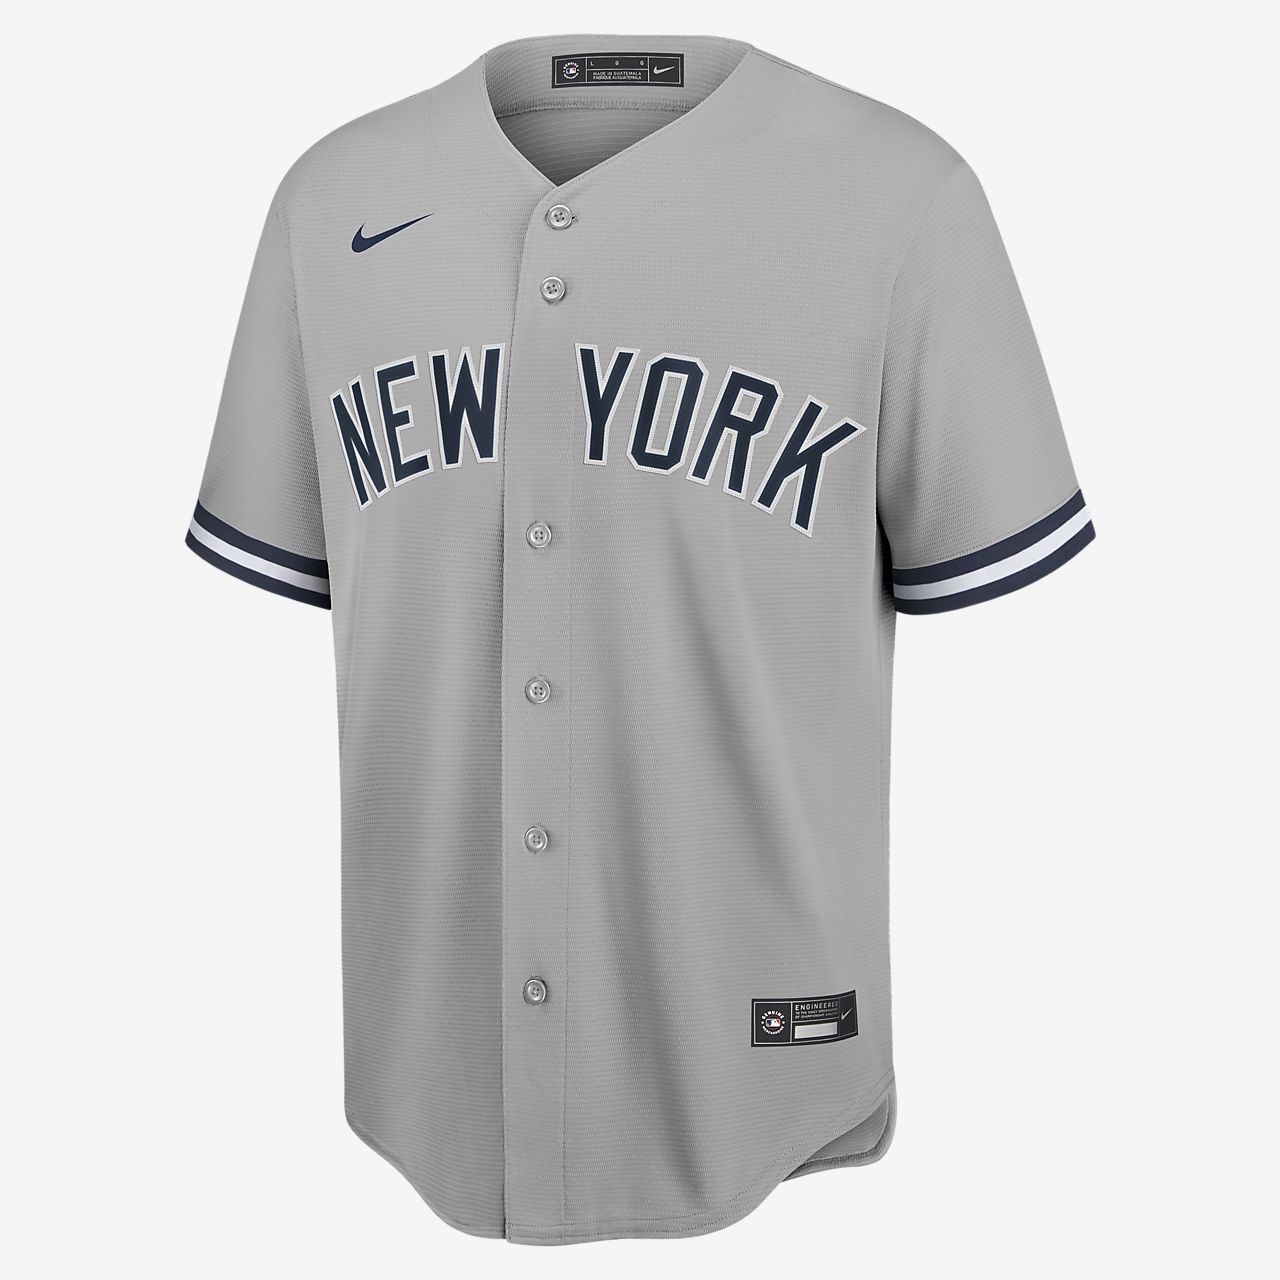 Yankees Baseball Jersey Flash Sales, 50% OFF